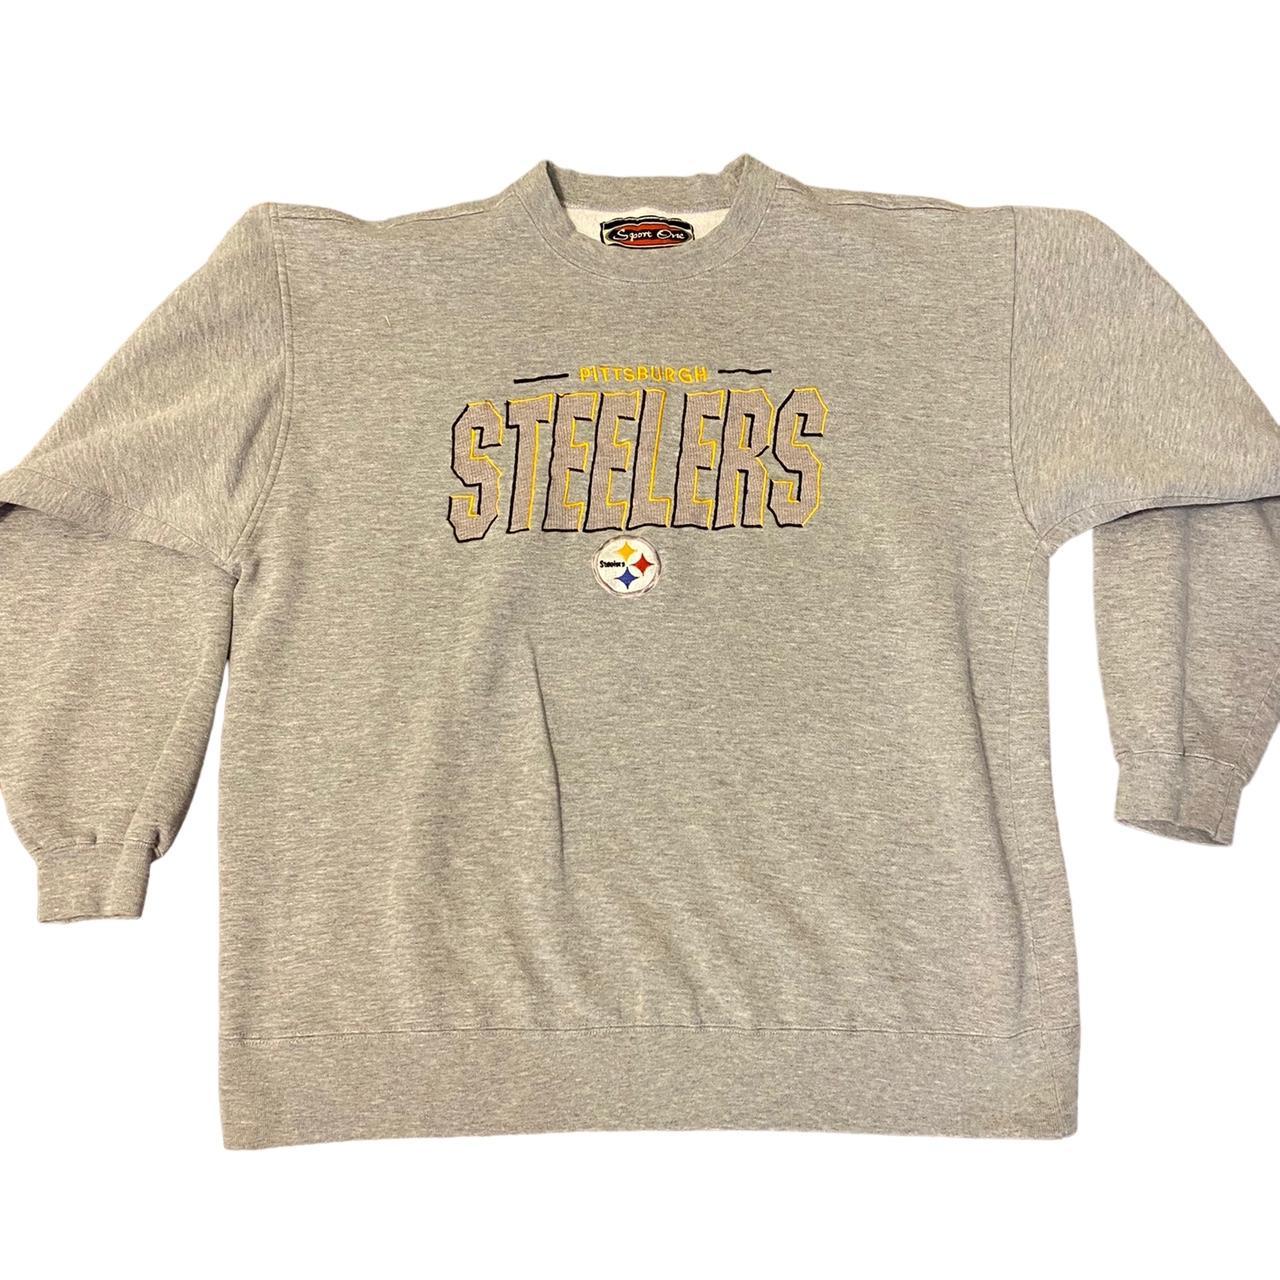 90s steelers sweatshirt